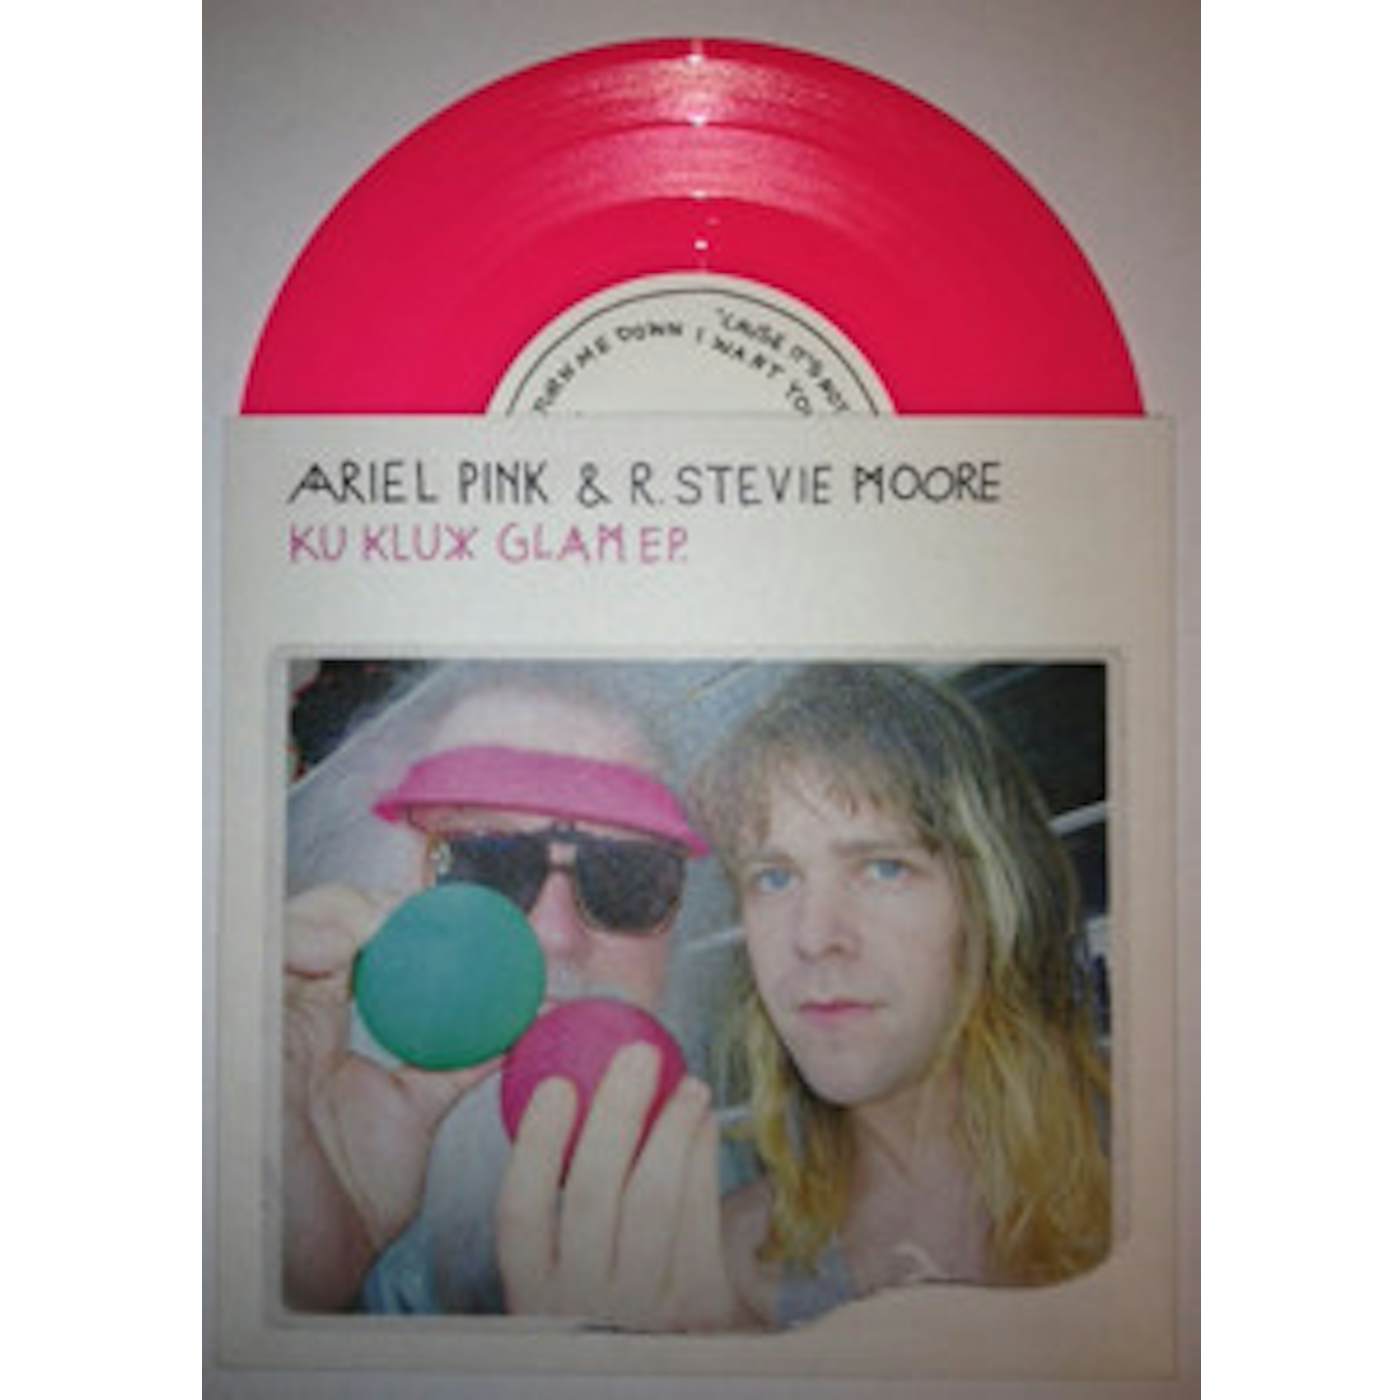 Ariel Pink & R. Stevie Moore KU KLUX GLAM EP Vinyl Record